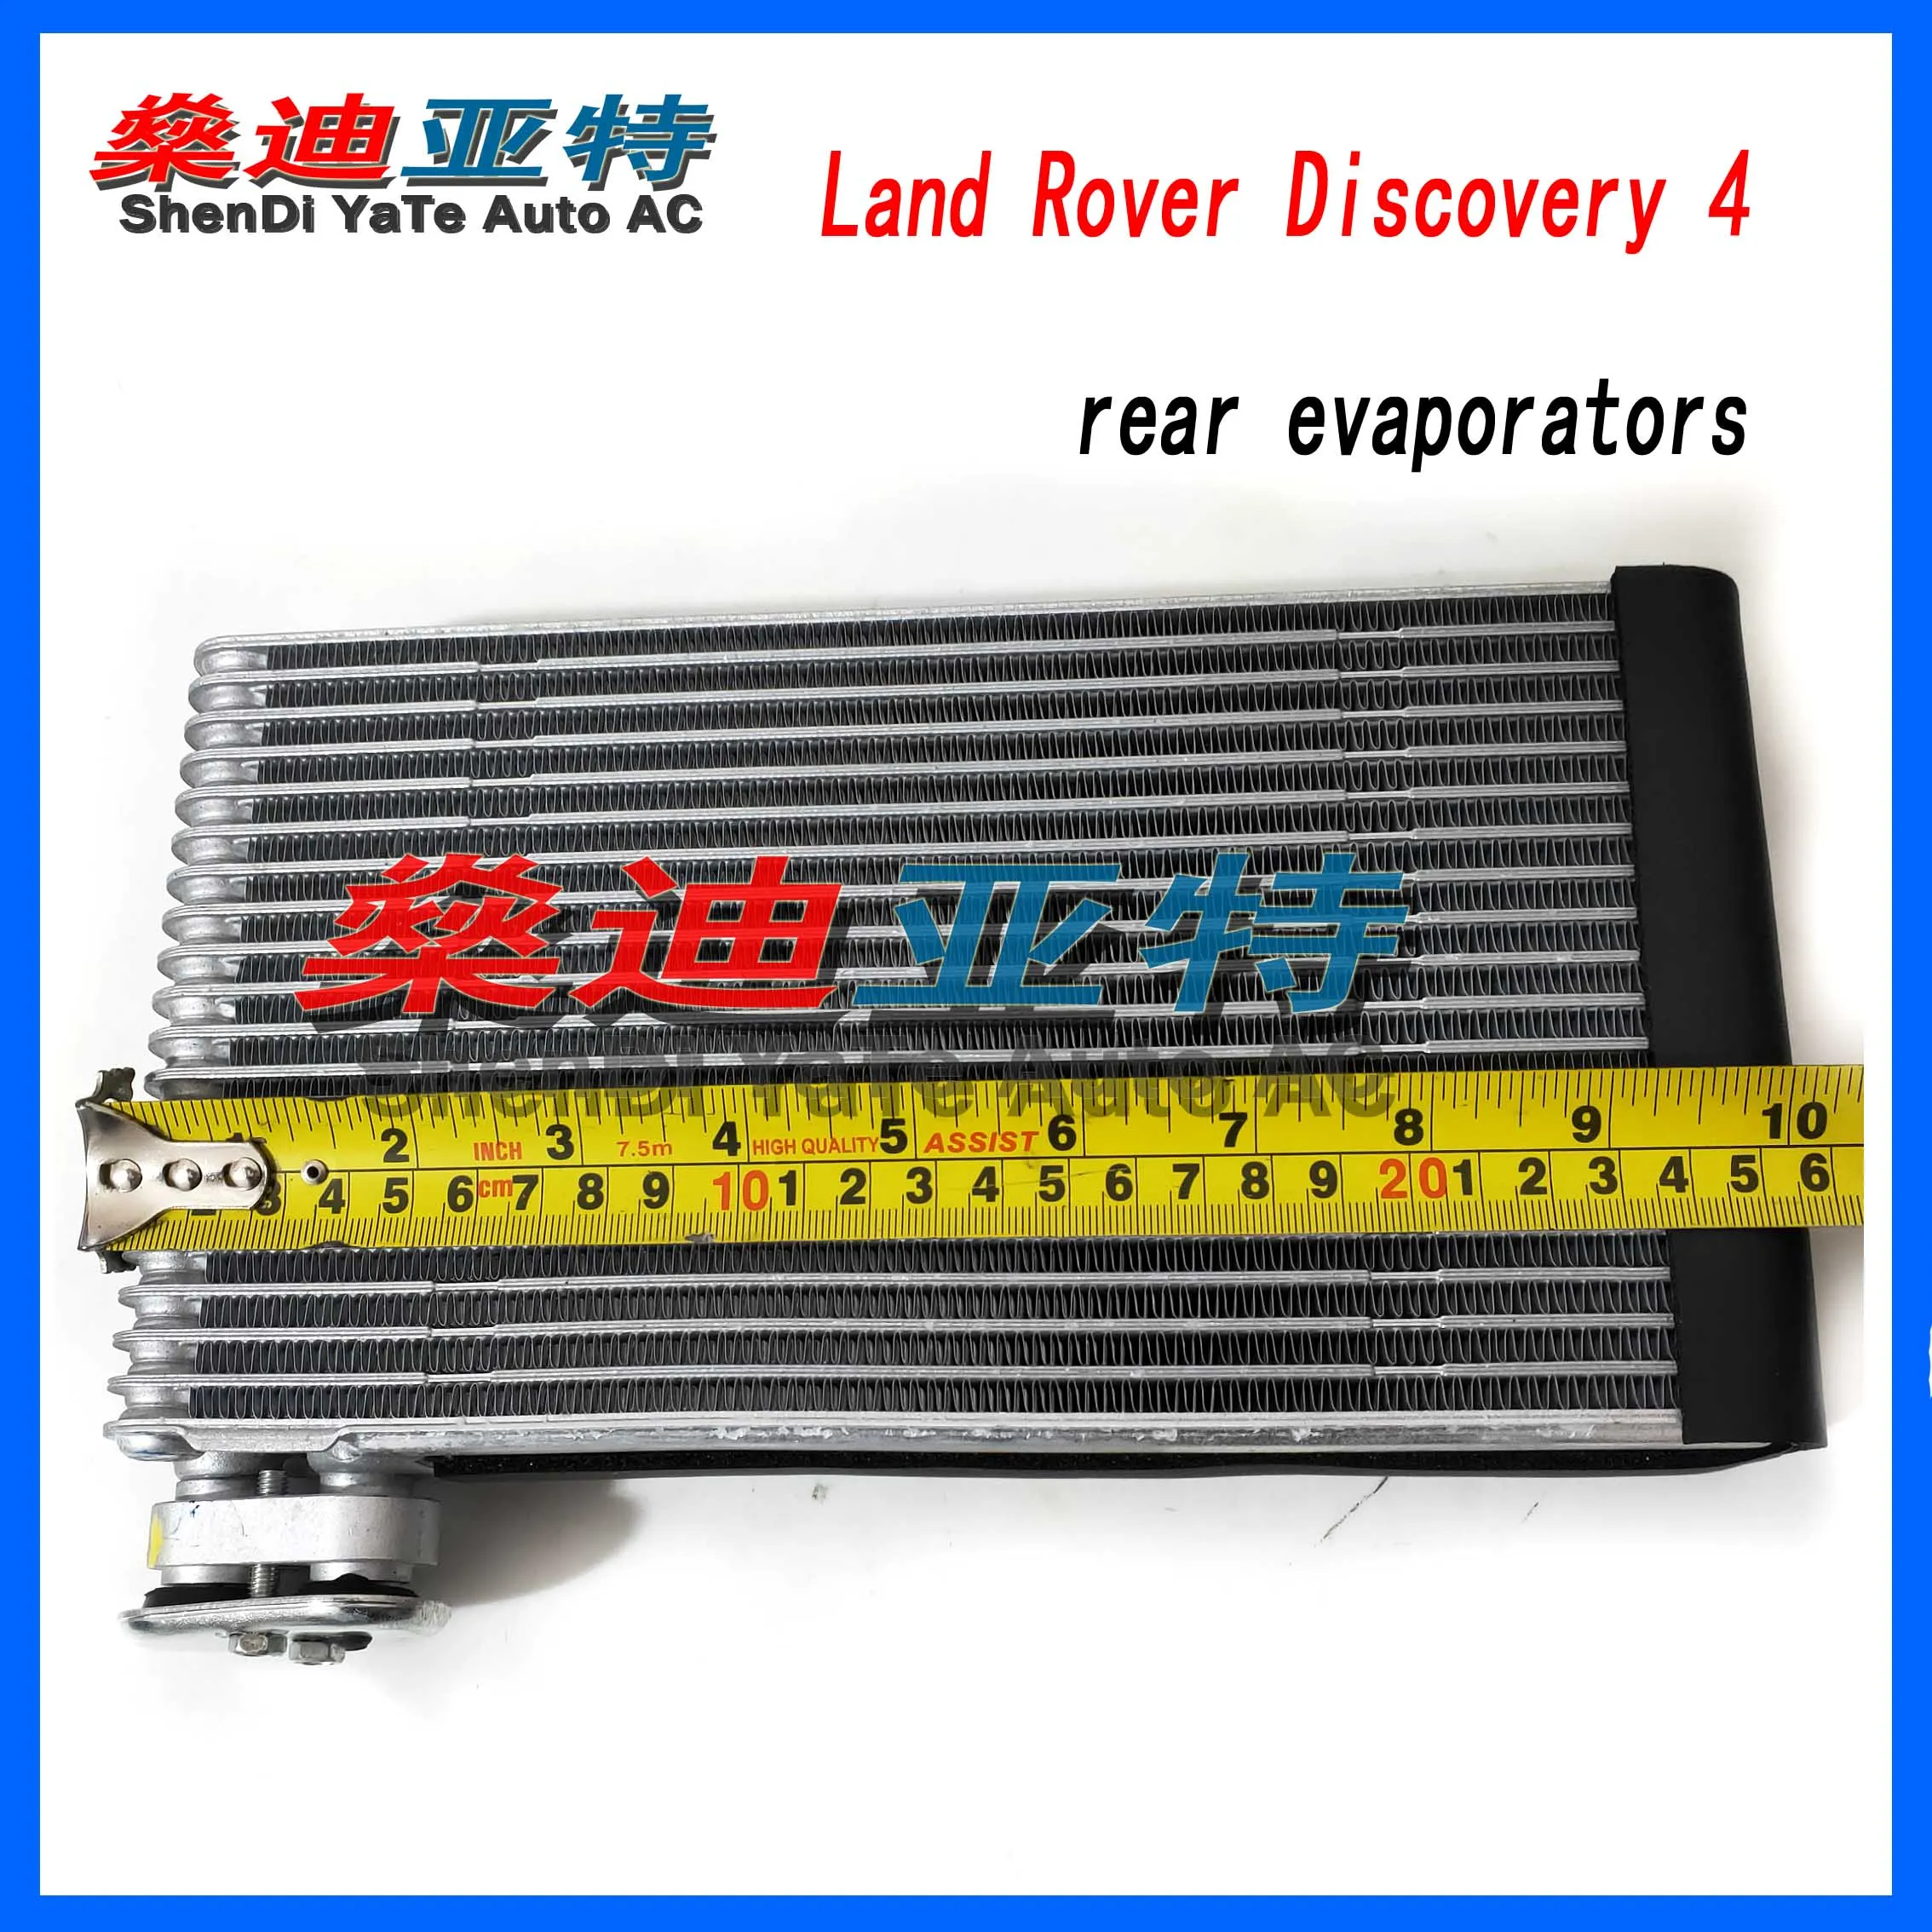 ShenDi YaTe Авто AC Автомобильный кондиционер испаритель ядро для Land Rover Discovery 4 задний испаритель